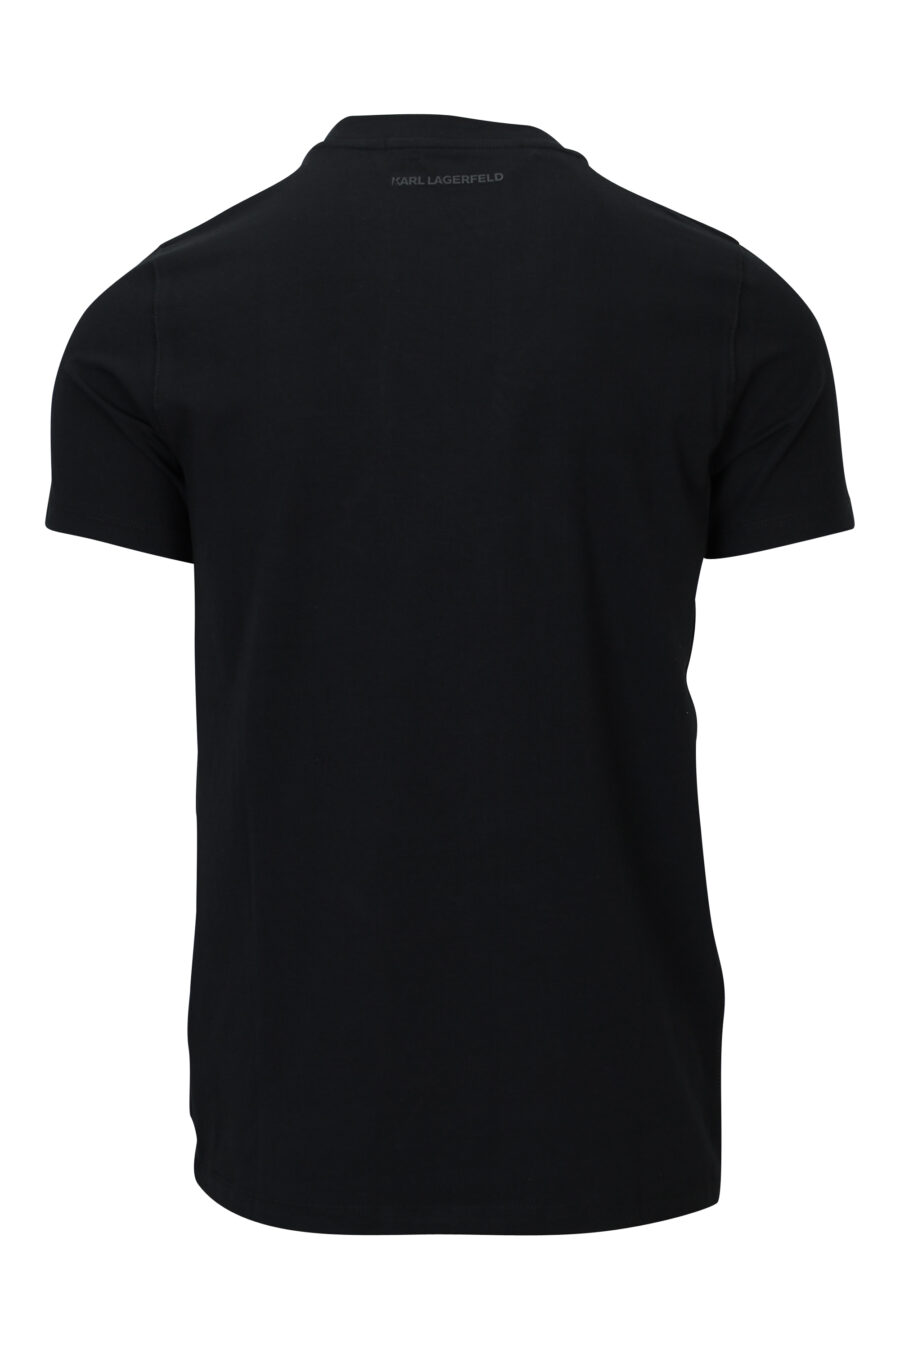 Camiseta negra con maxilogo firma delineado "rue st guillaume" - 4062226958608 1